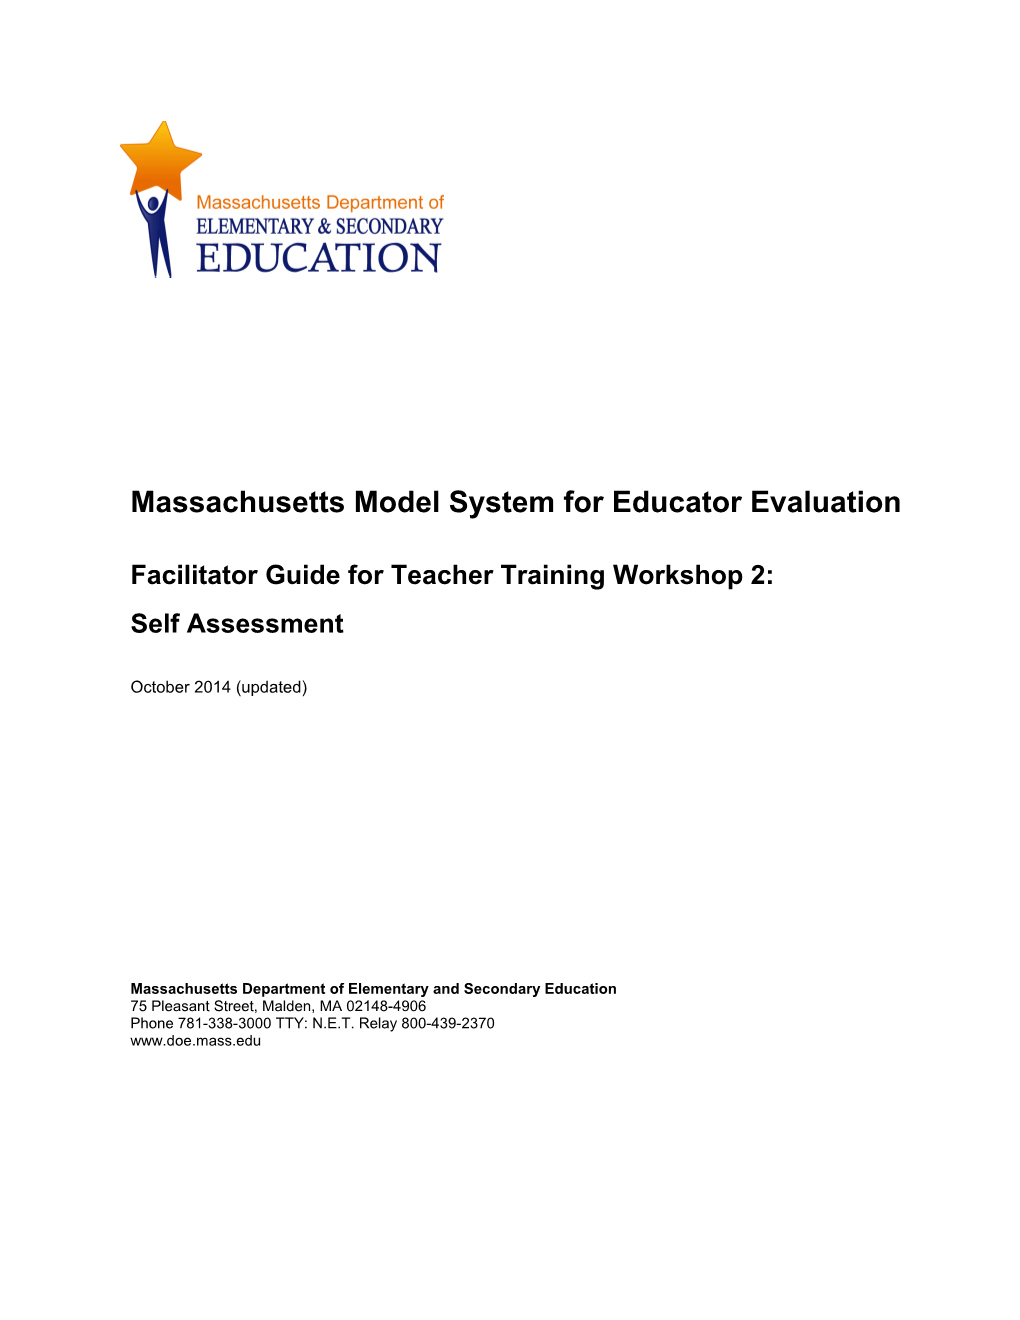 MA Model System Training Workshop 2: Self-Assessment Facilitator Guide